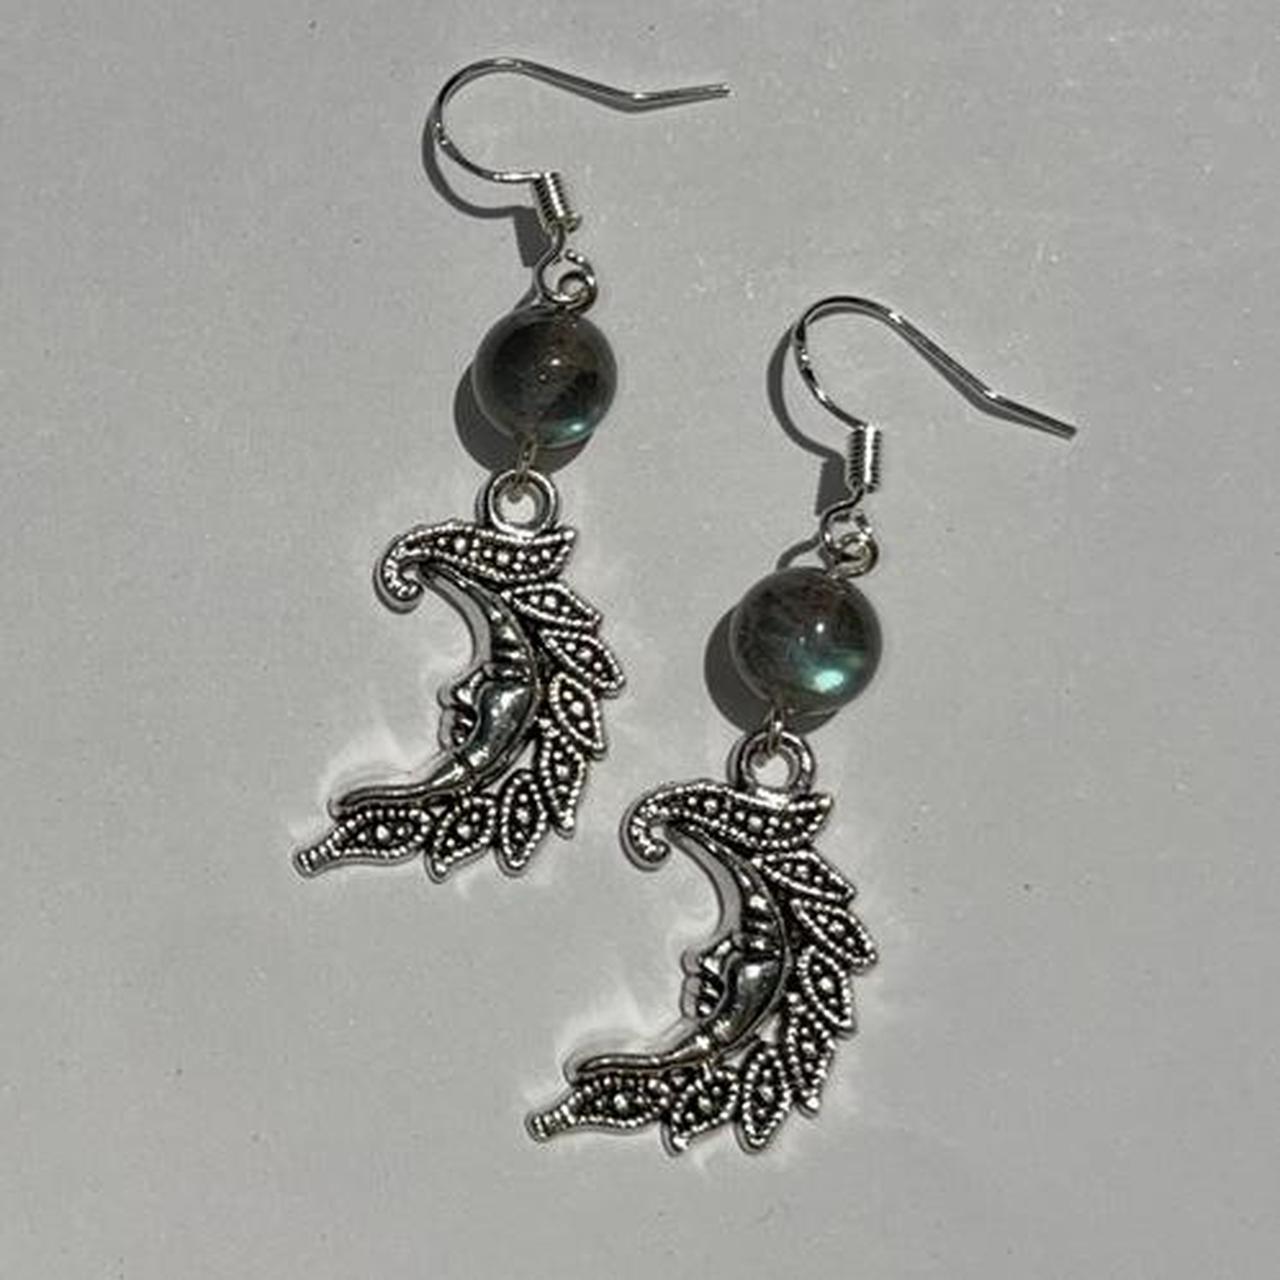 Product Image 2 - Handmade silver wire earrings!

🌟 Handmade